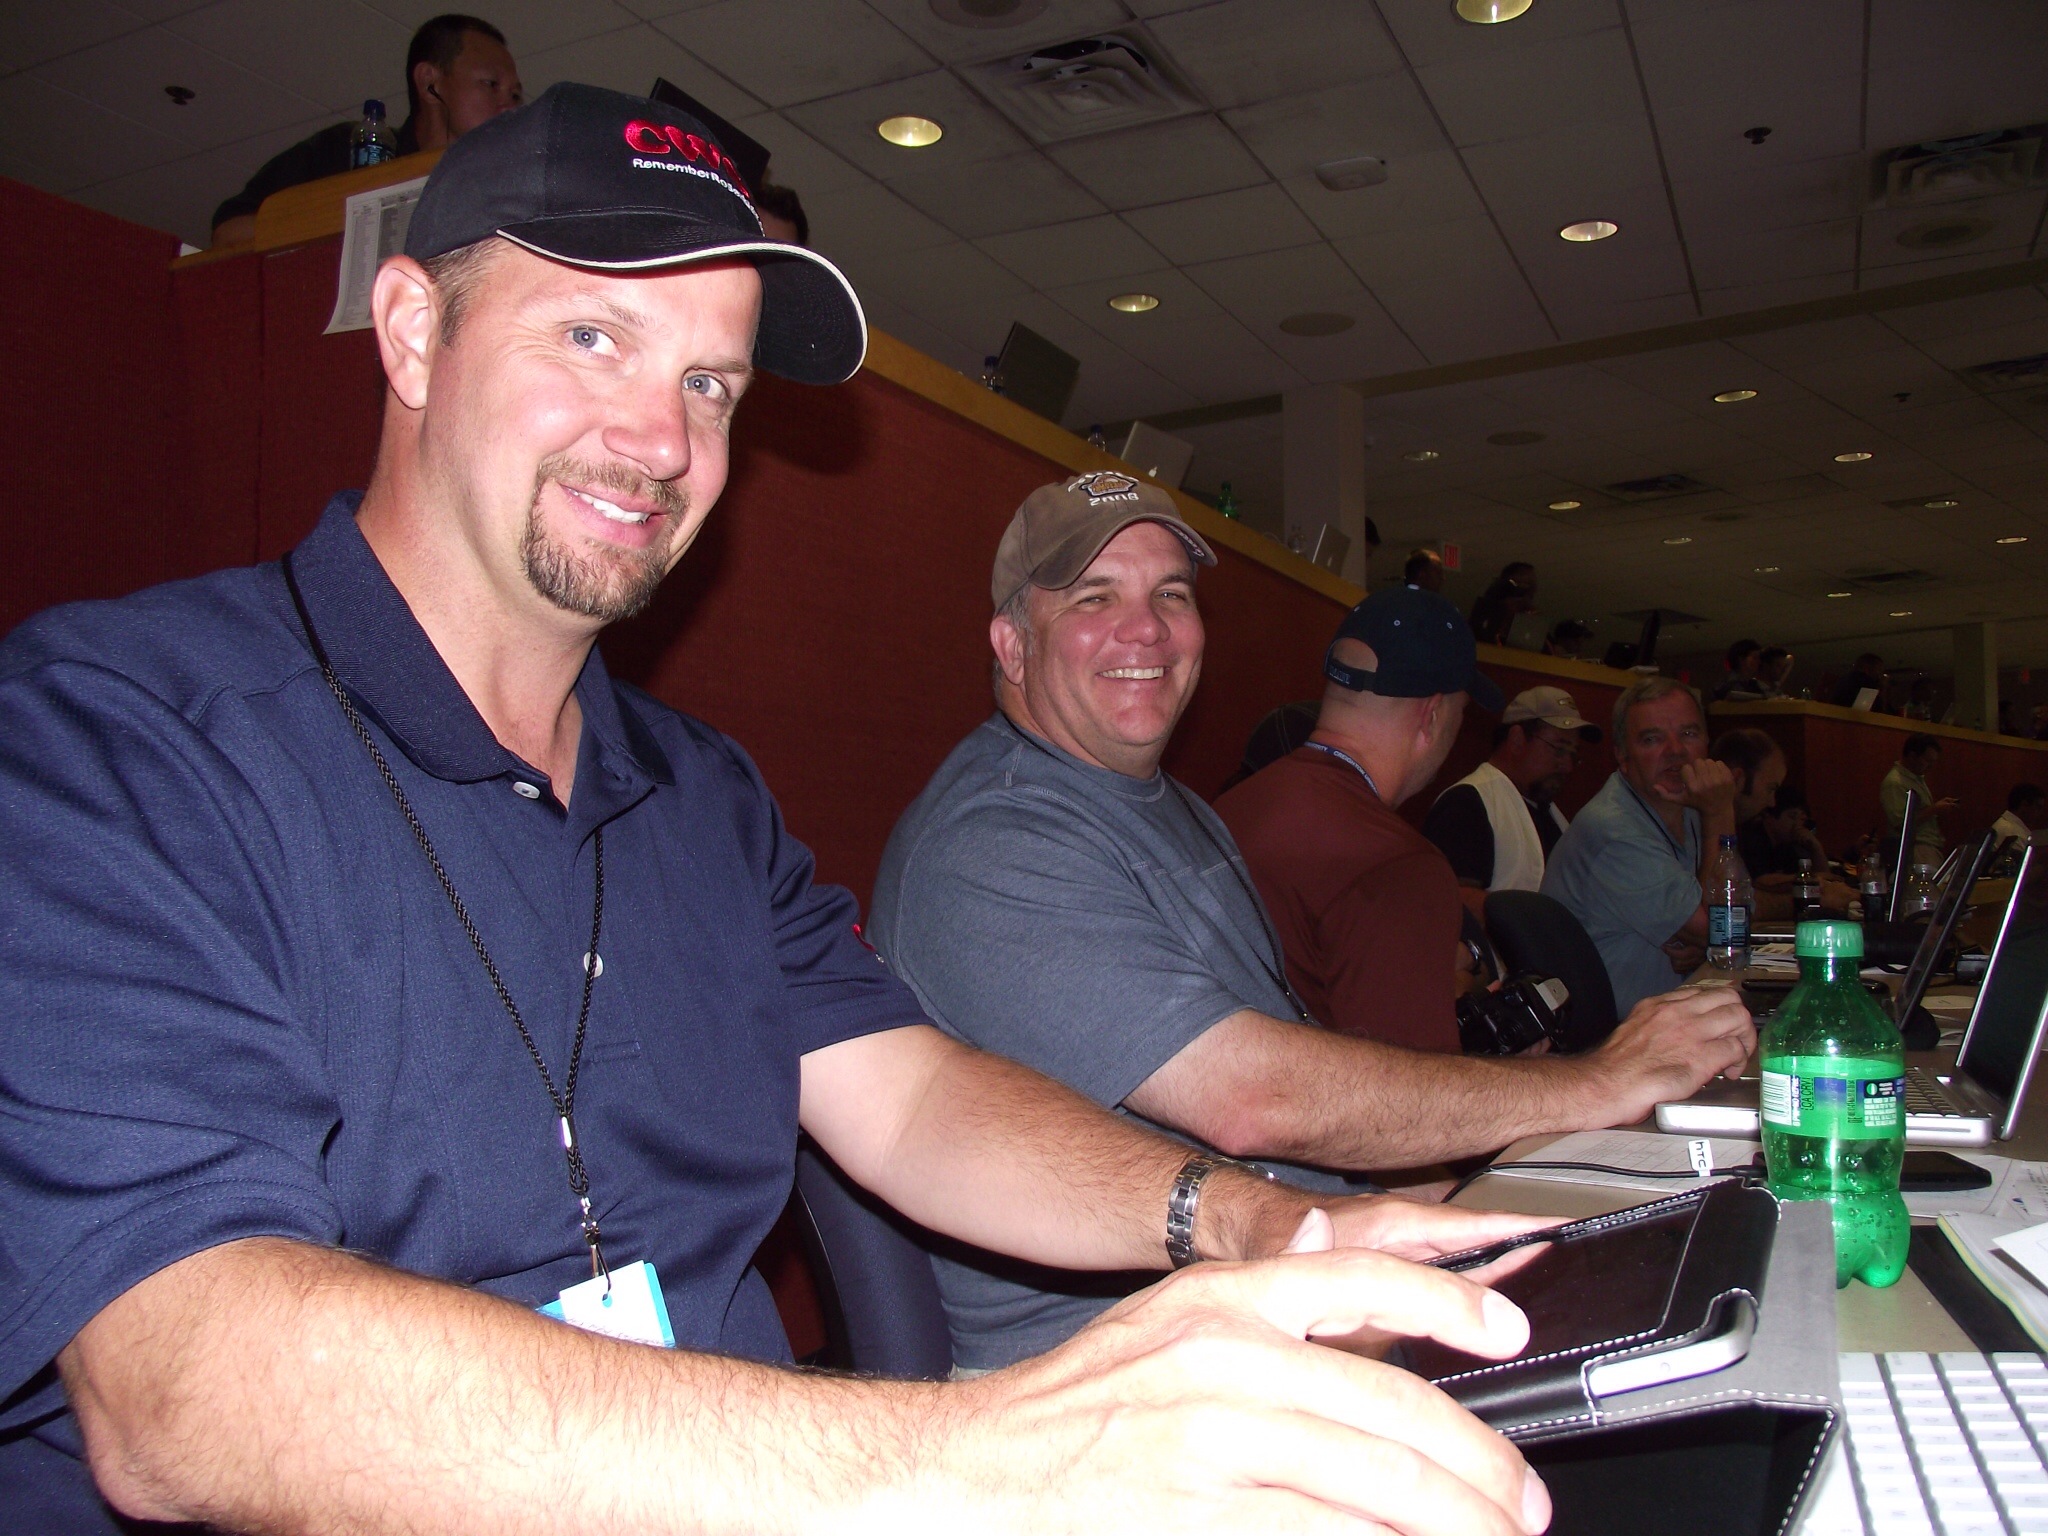 Paul Fiarkoski (me) with Sean Stires in the press box at Rosenblatt Stadium for the 2010 CWS